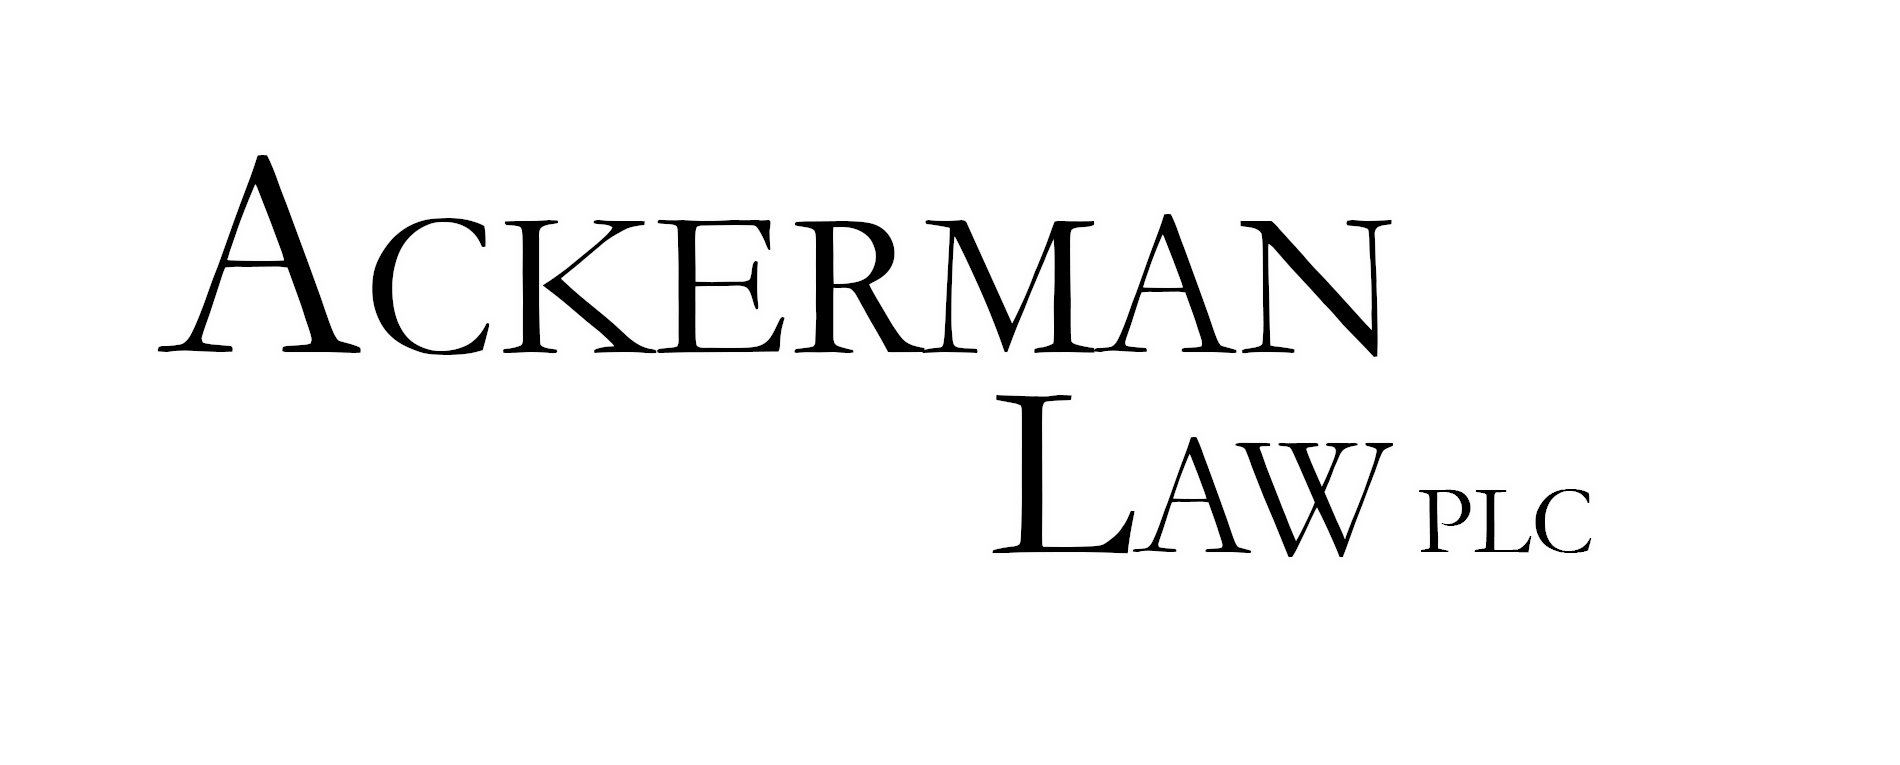 Ackerman Law PLC